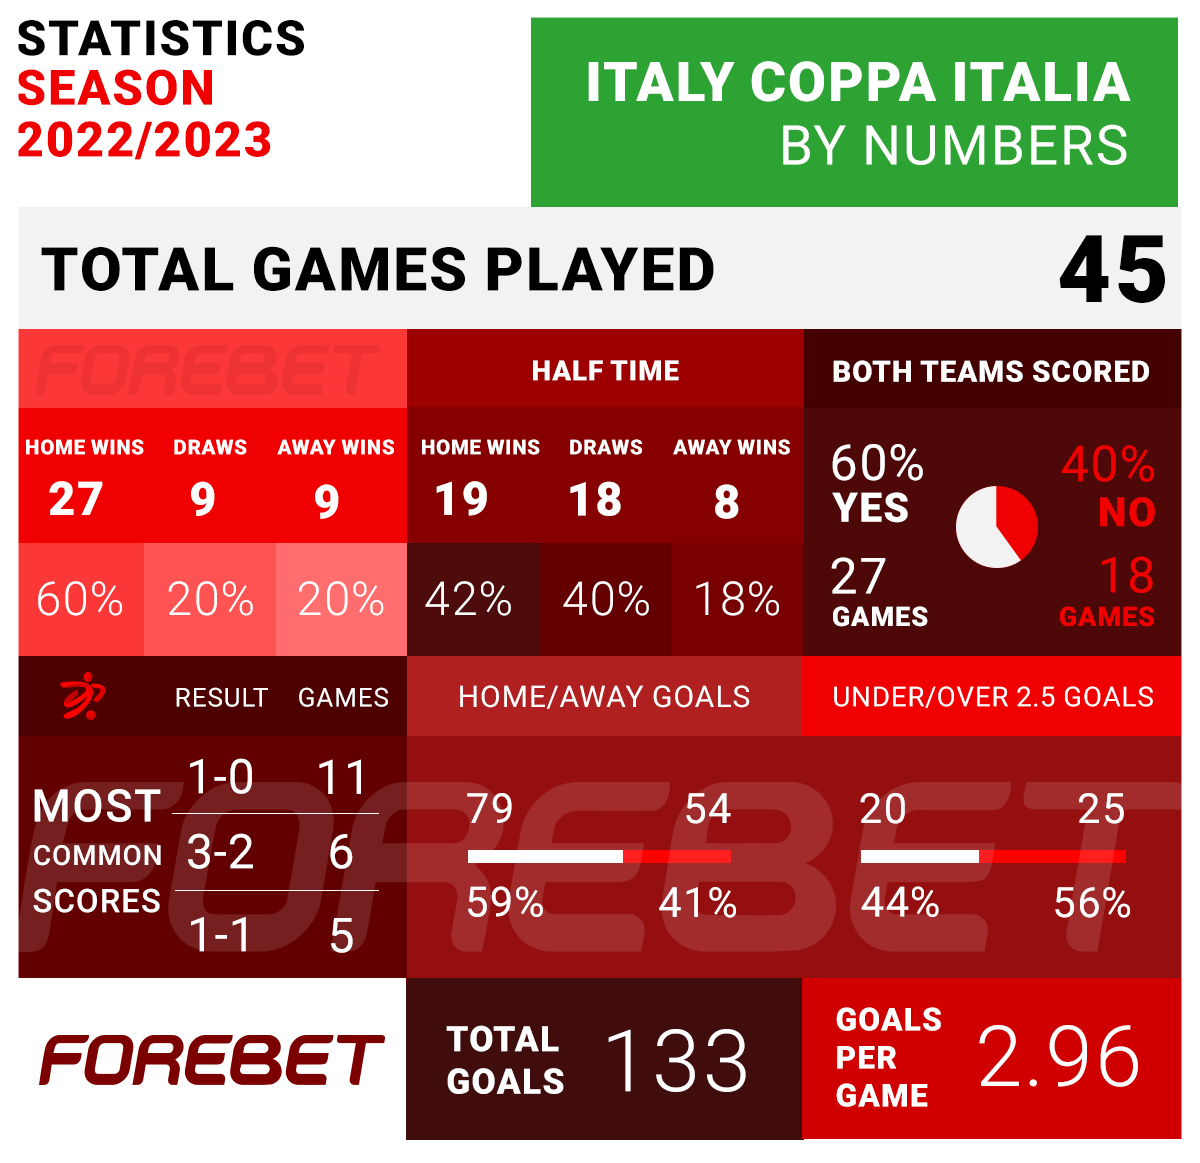 @Inter lift the Coppa Italia! 🇮🇹 🏆 Let's have a look at the stats of the tournament! 

#CoppaItaliaFrecciarossa #Inter #forebet